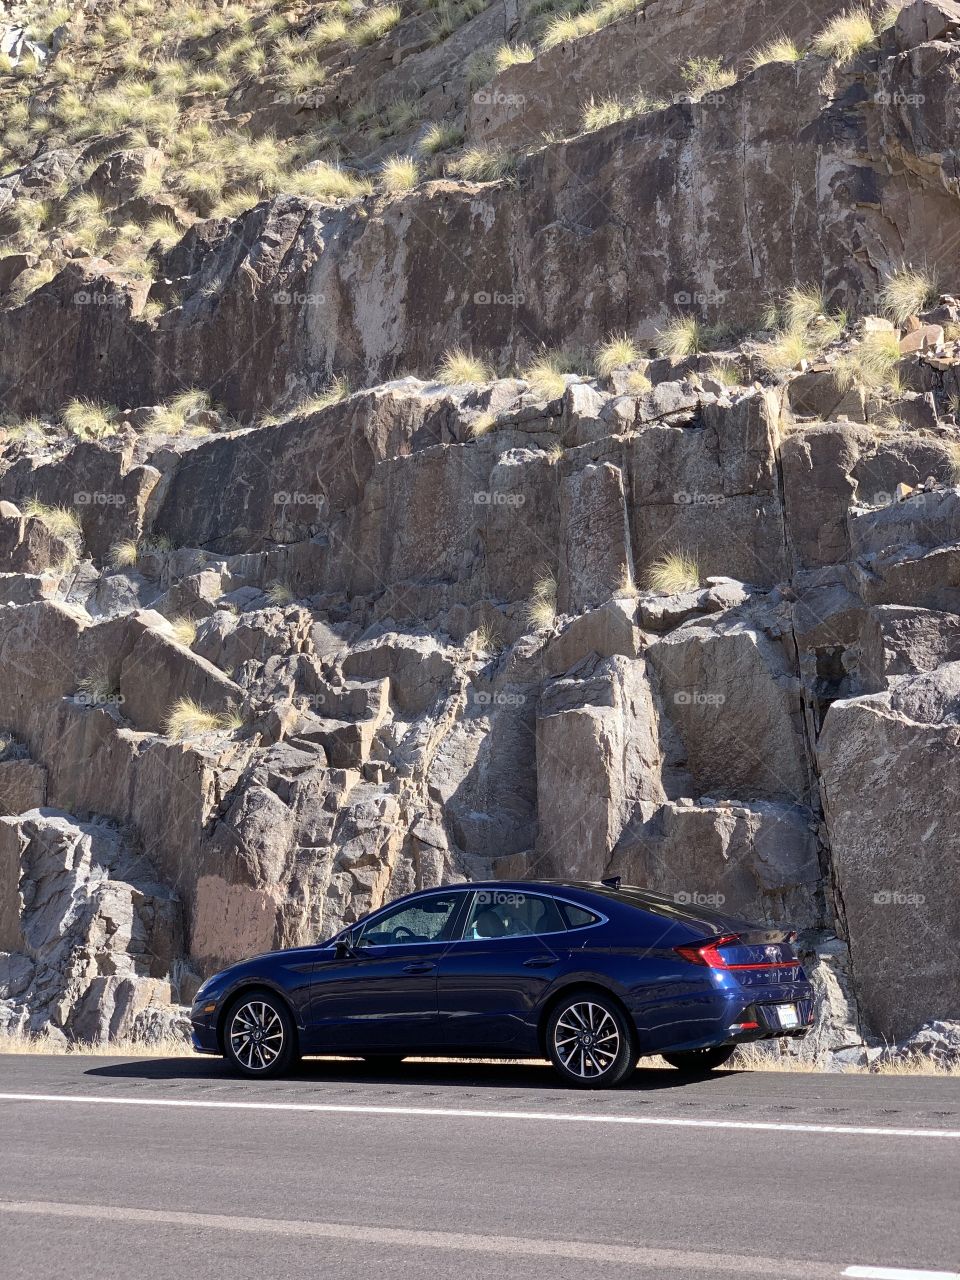 2020 Hyundai Sonata is perfect for carving through canyons